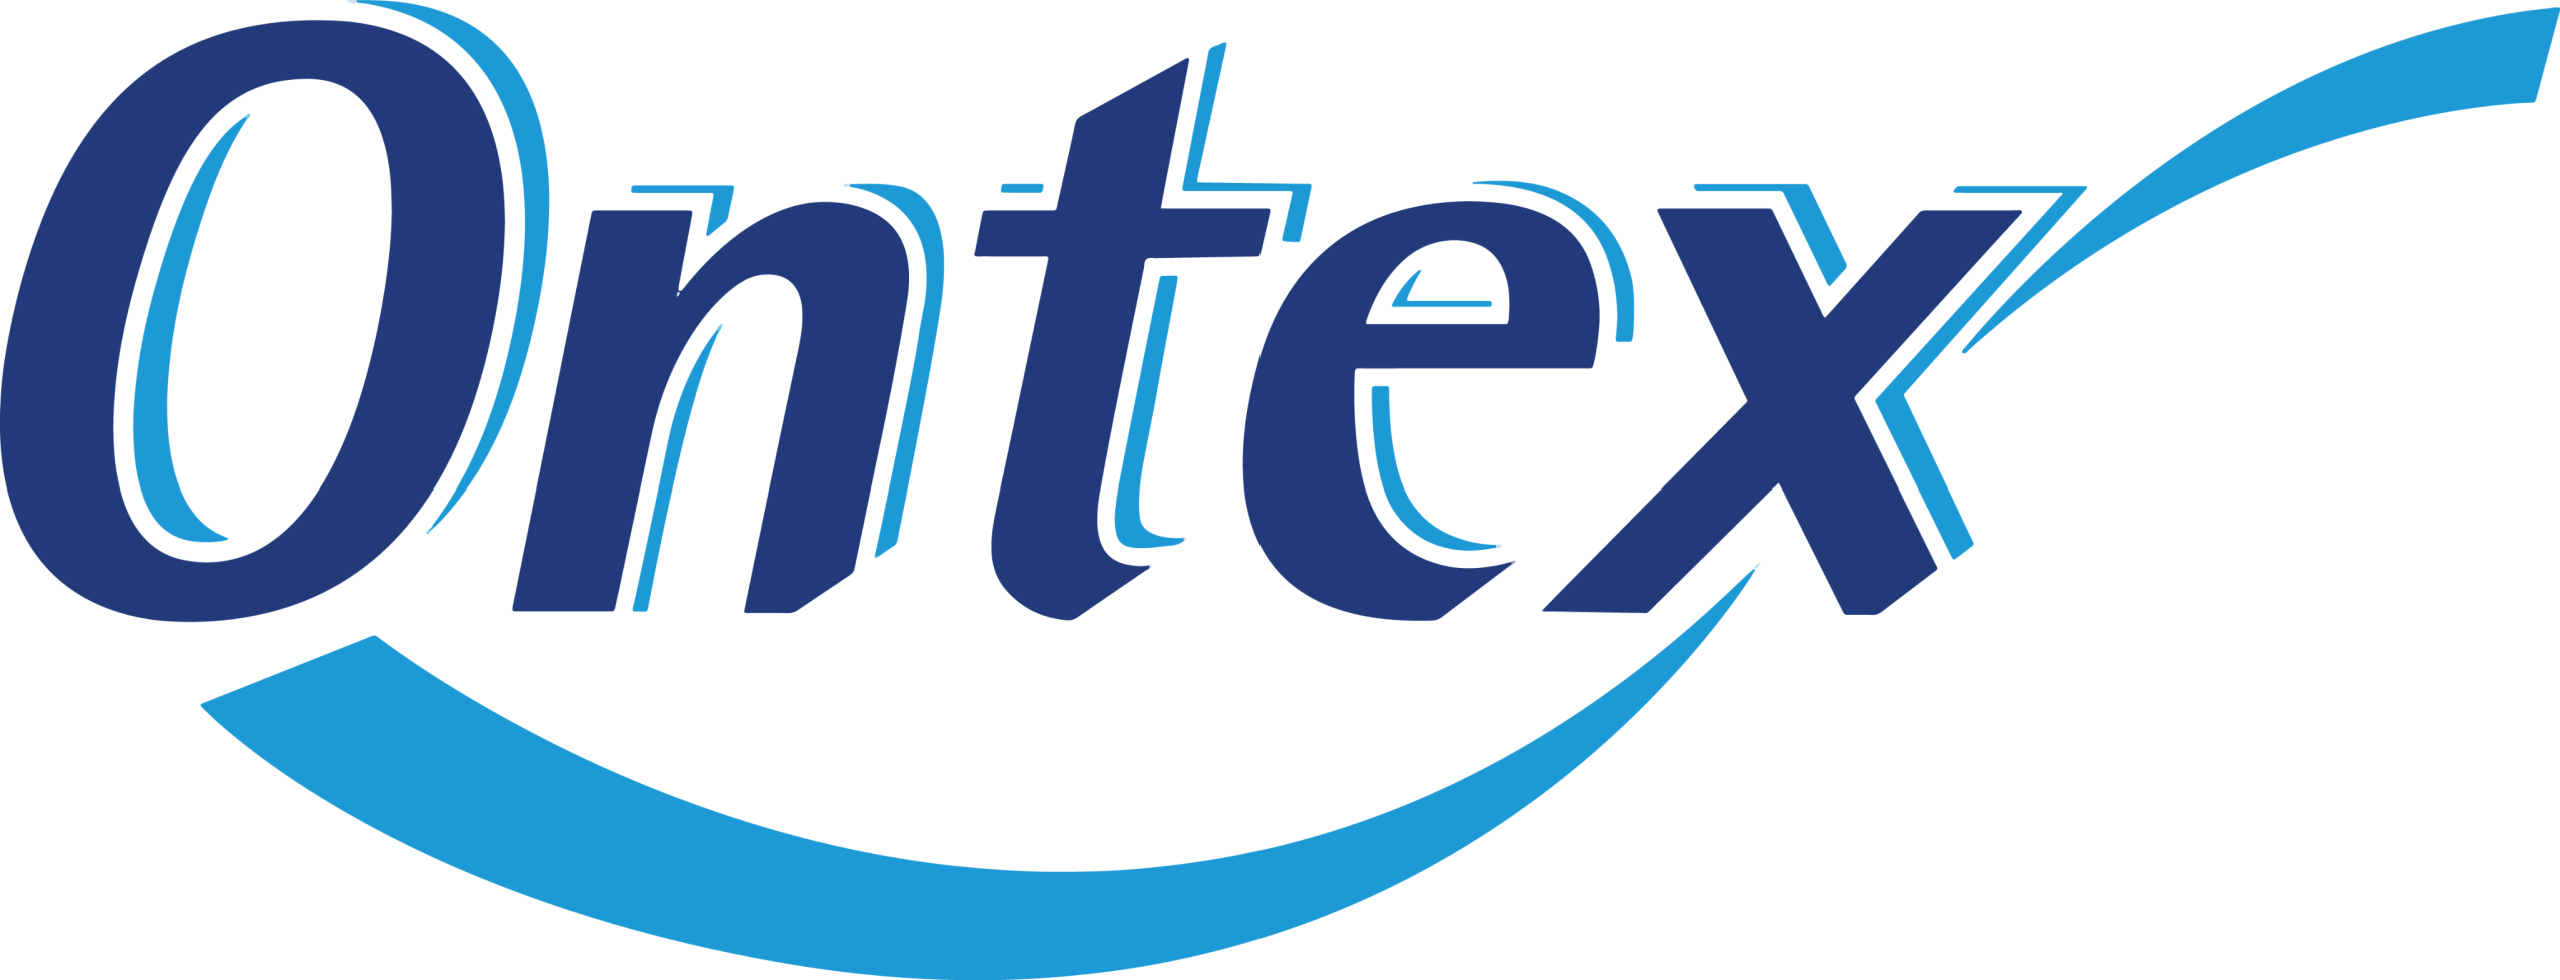 Ontex FRANCE